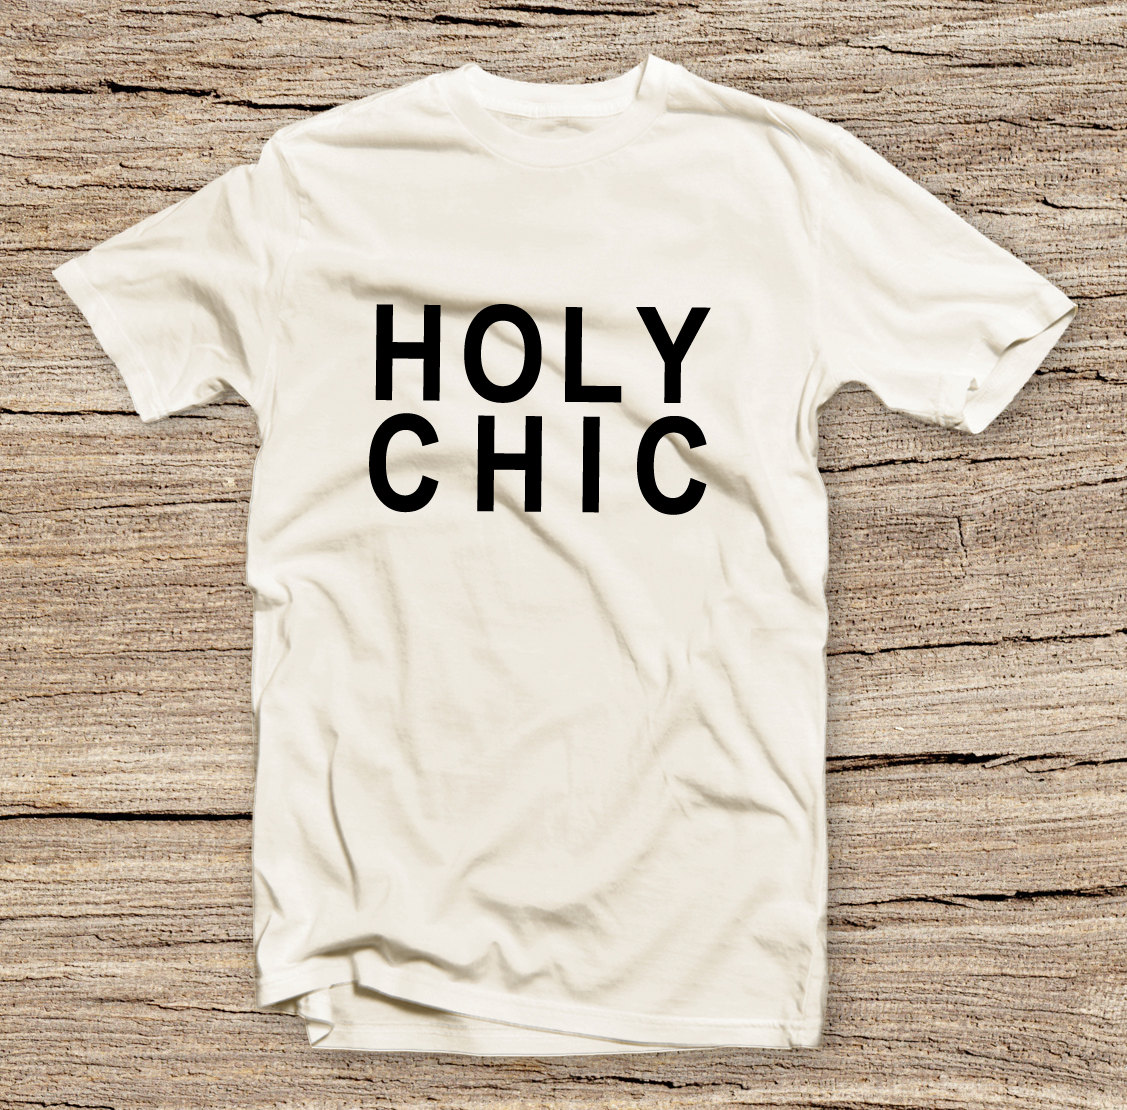 Pts-093 Holy Chic T-shirt, Fashion Style Printed T-shirt